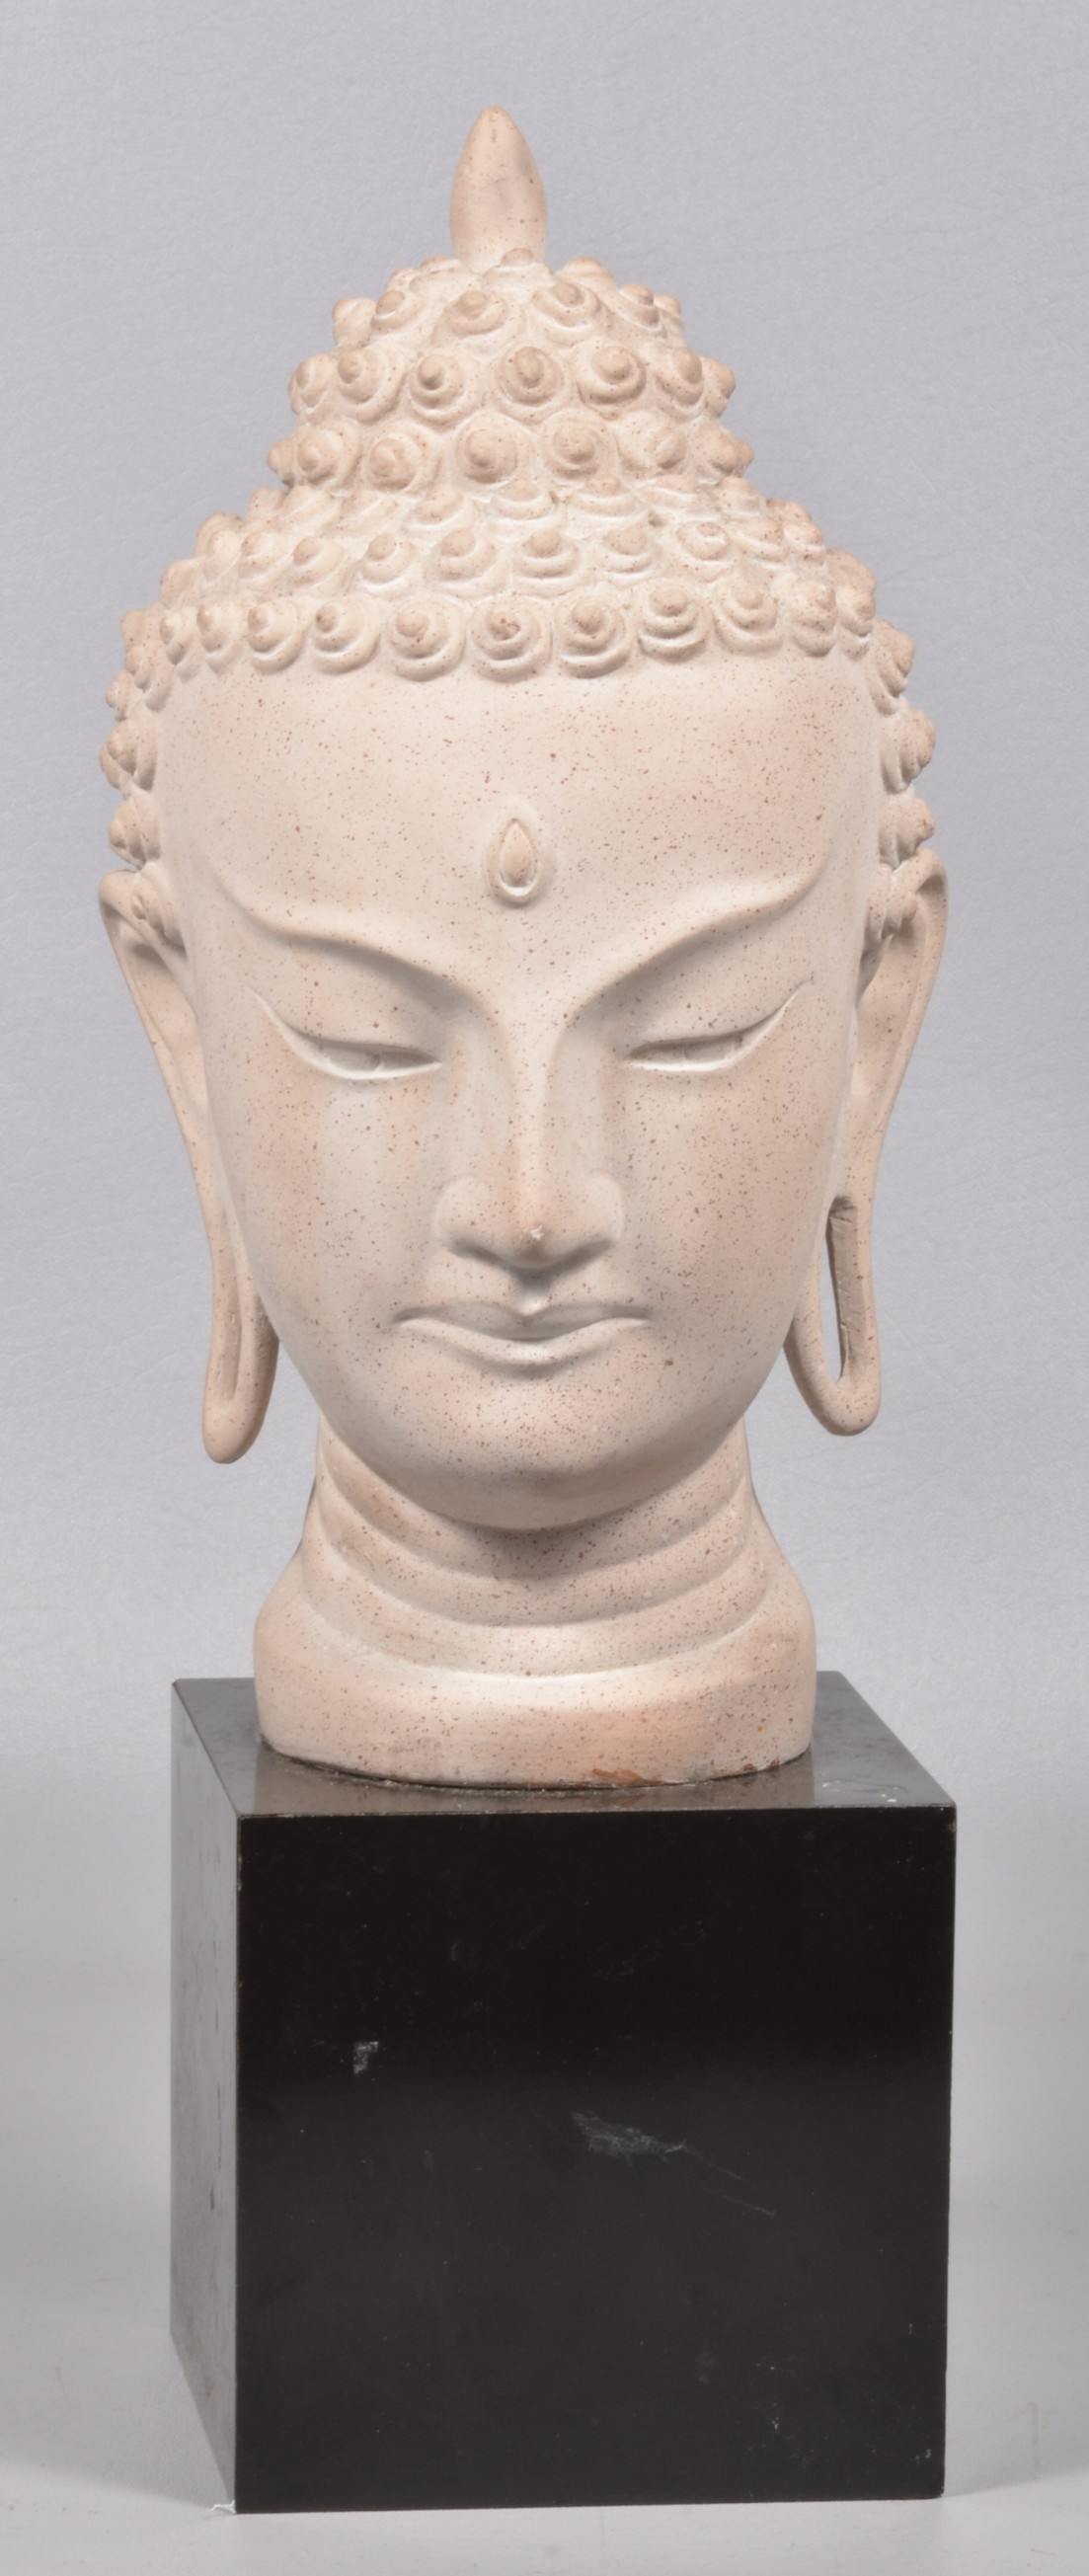 Ceramic bust of Shiva with third